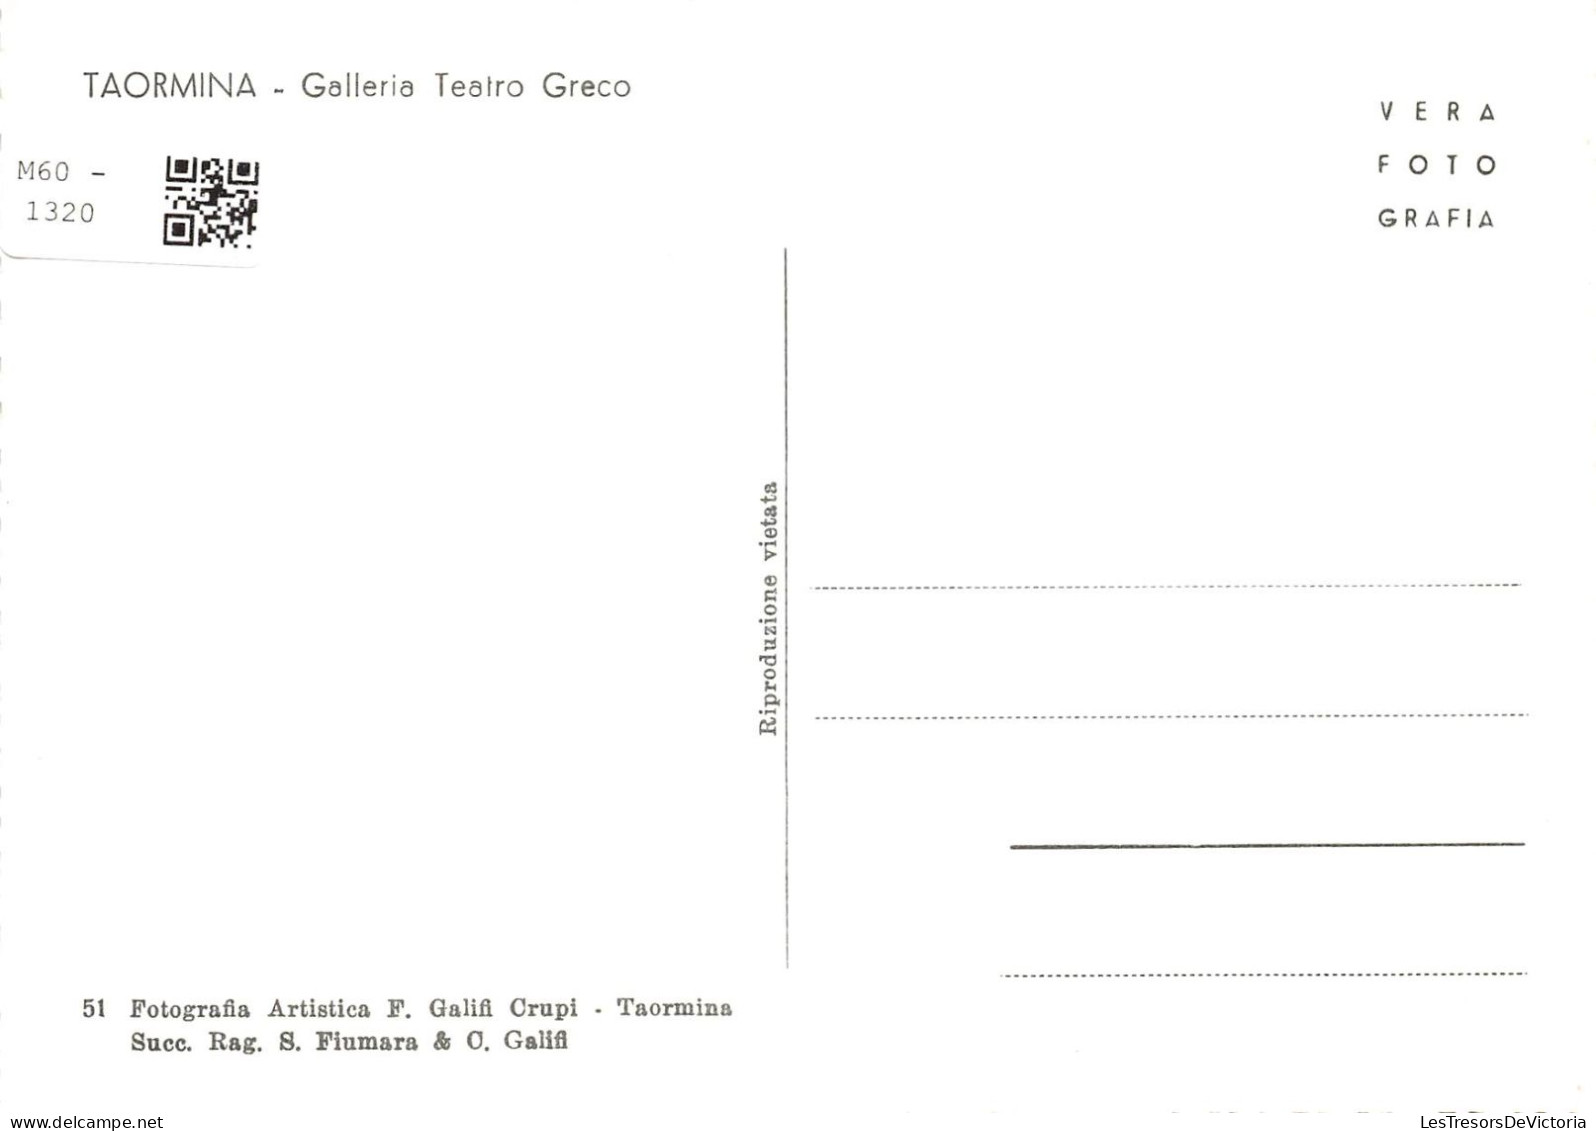 ITALIE - Taormina - Galleria Teatro Greco - Vue Générale - Carte Postale Ancienne - Messina